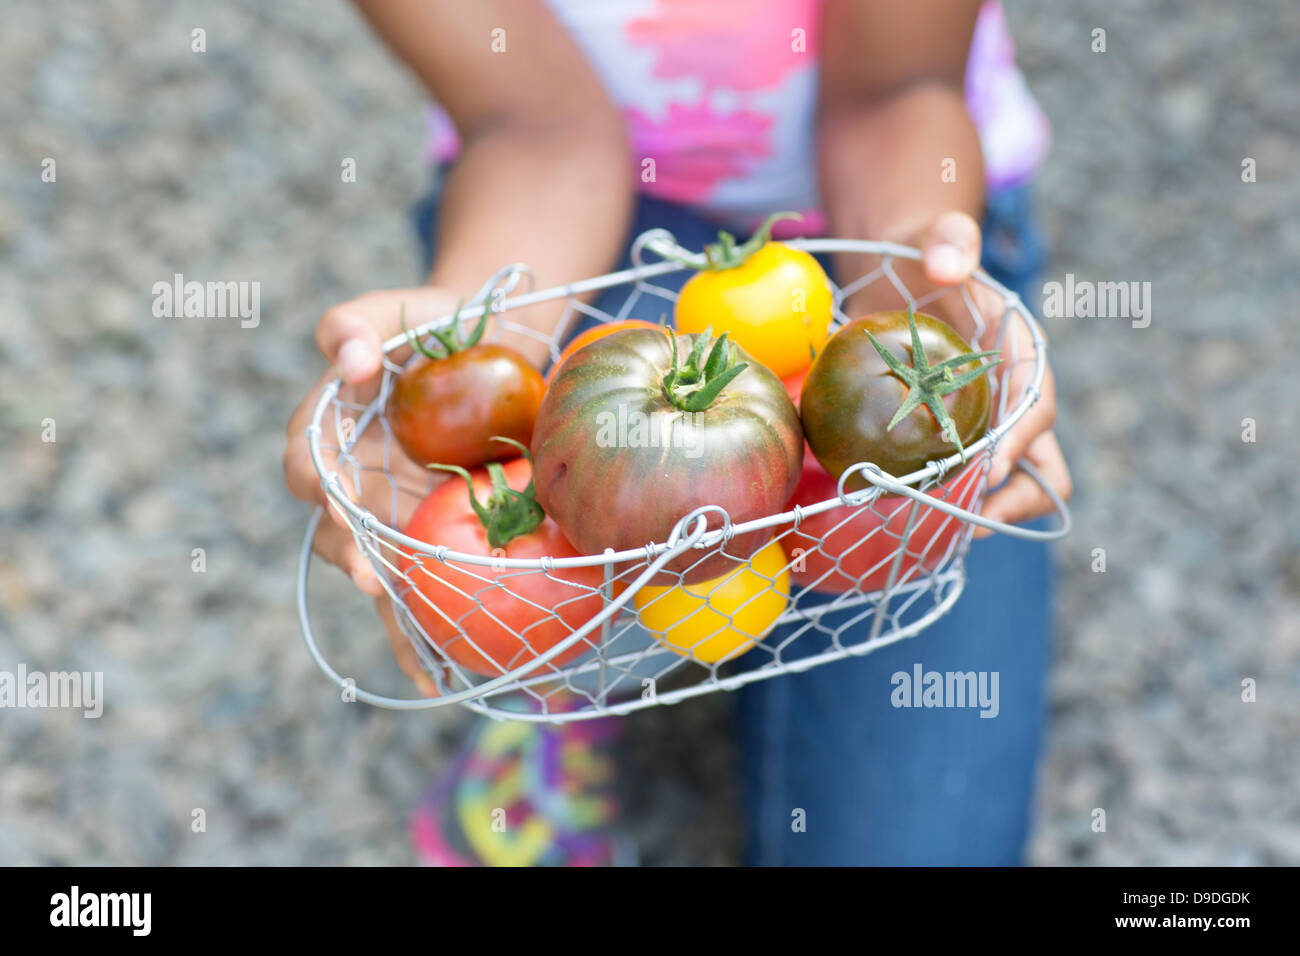 Girl holding basket of ripe tomatoes, cropped image Stock Photo